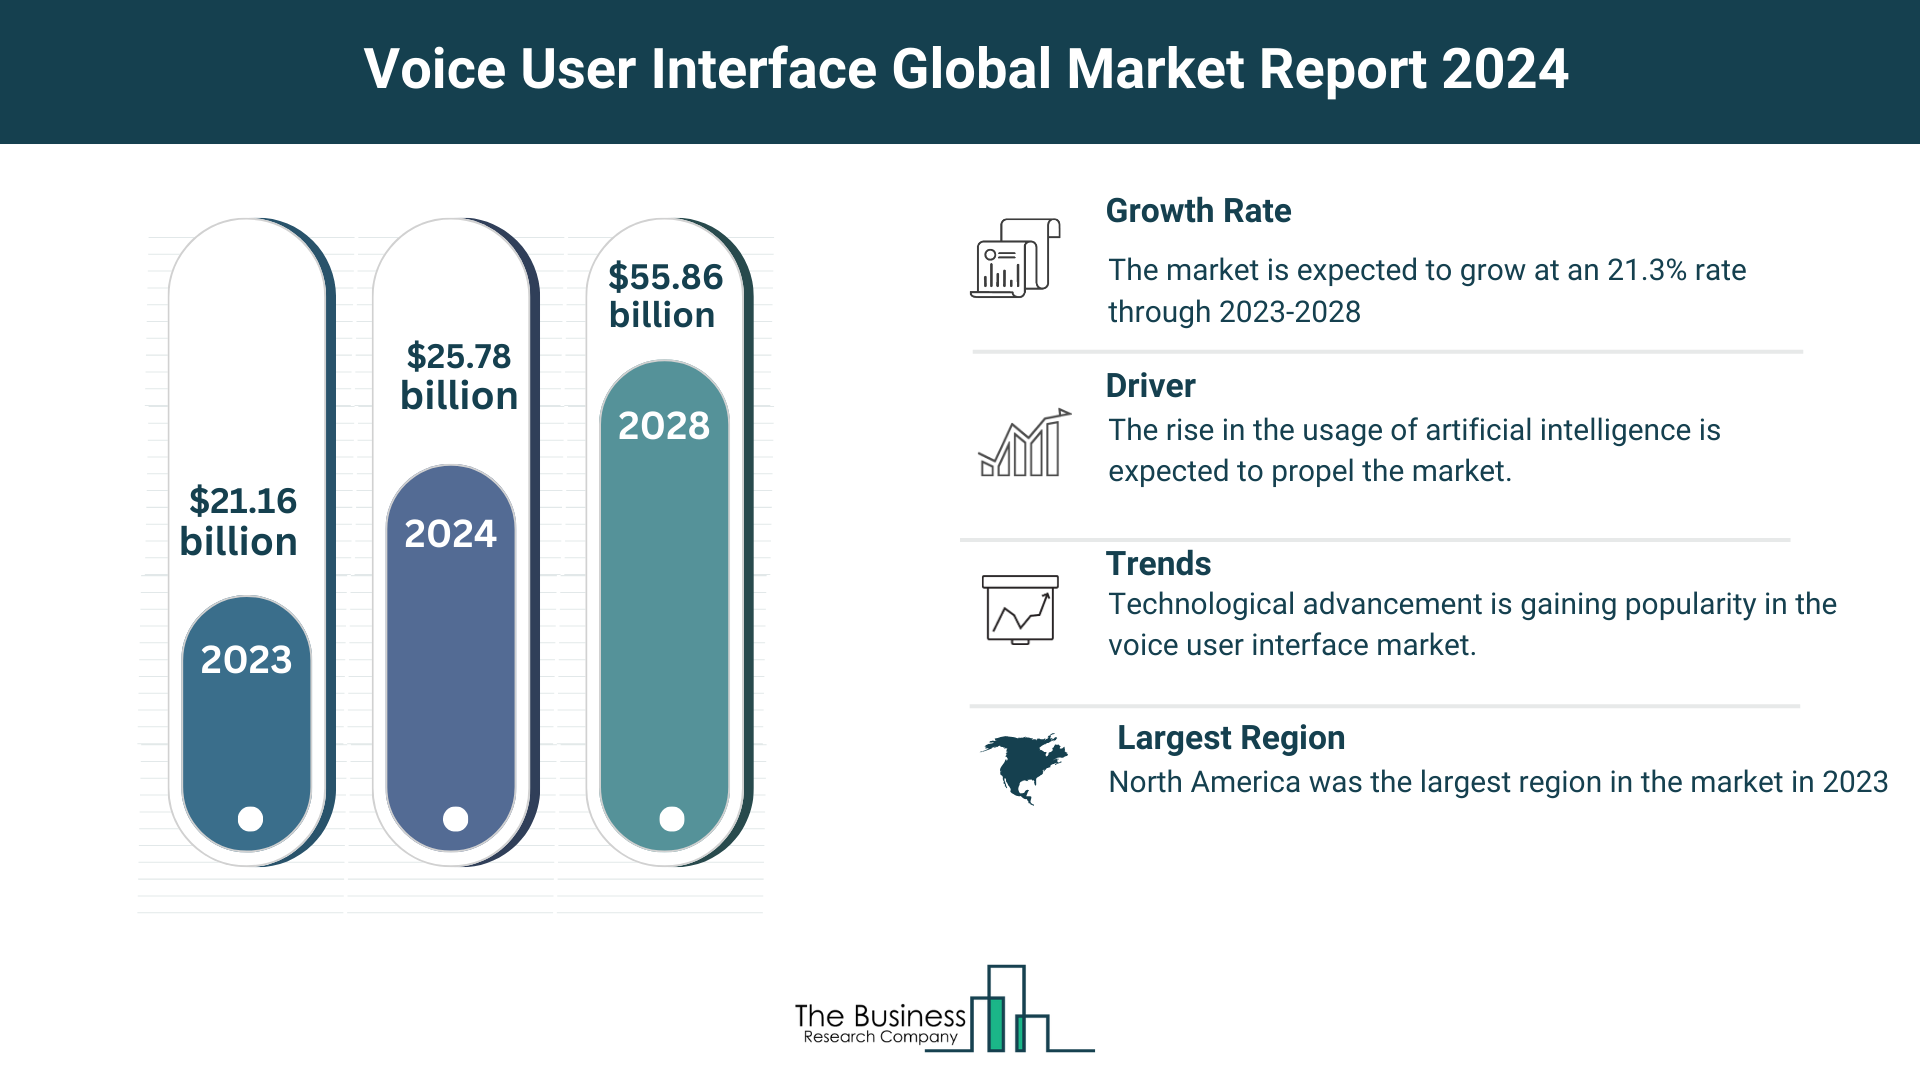 Global Voice User Interface Market